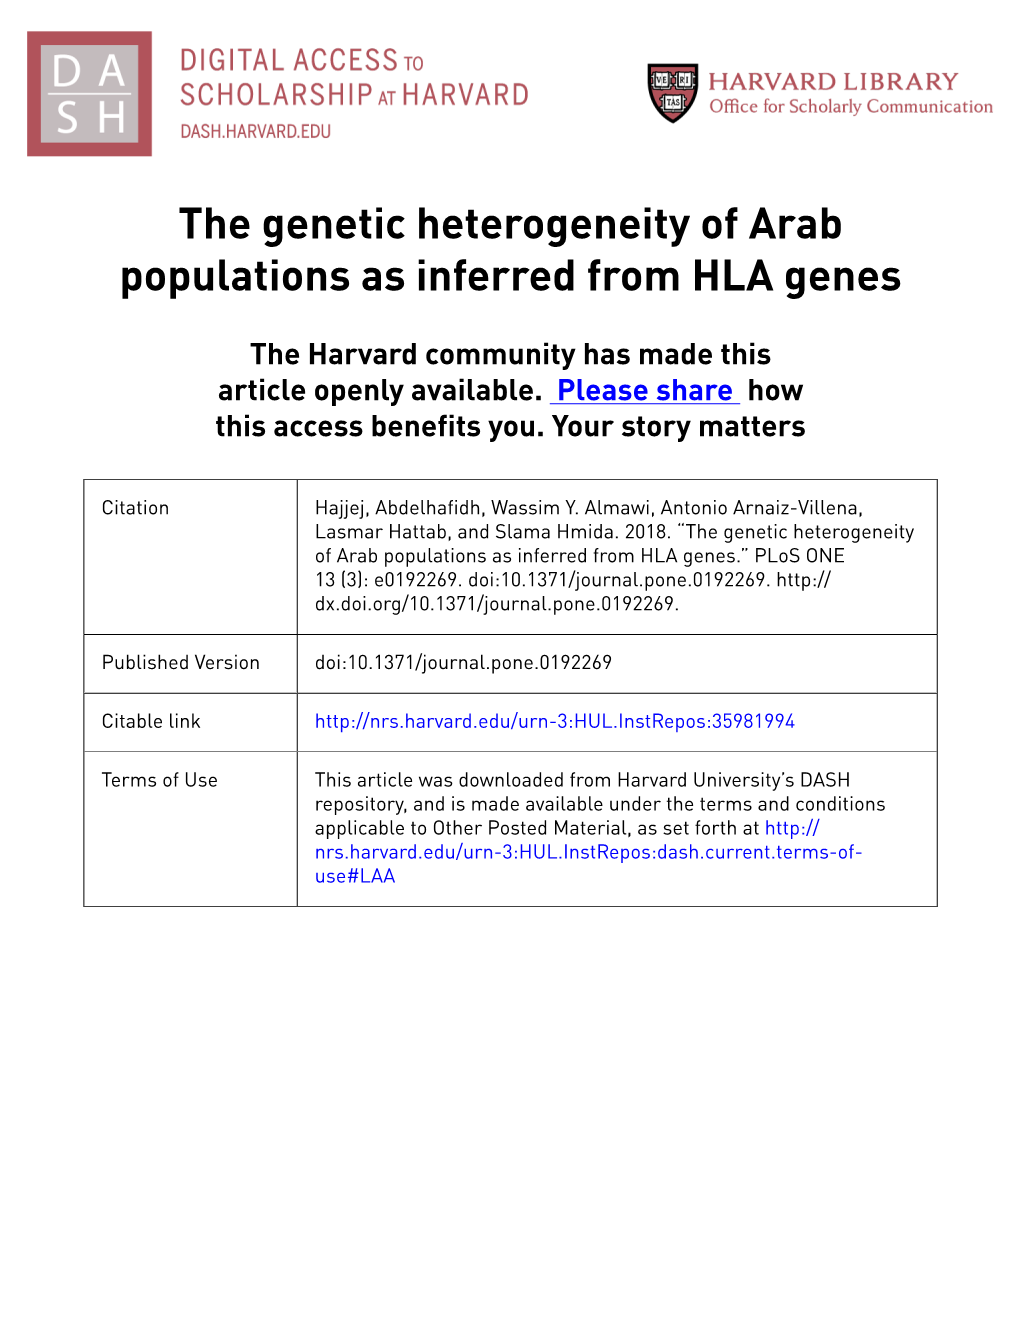 The Genetic Heterogeneity of Arab Populations As Inferred from HLA Genes